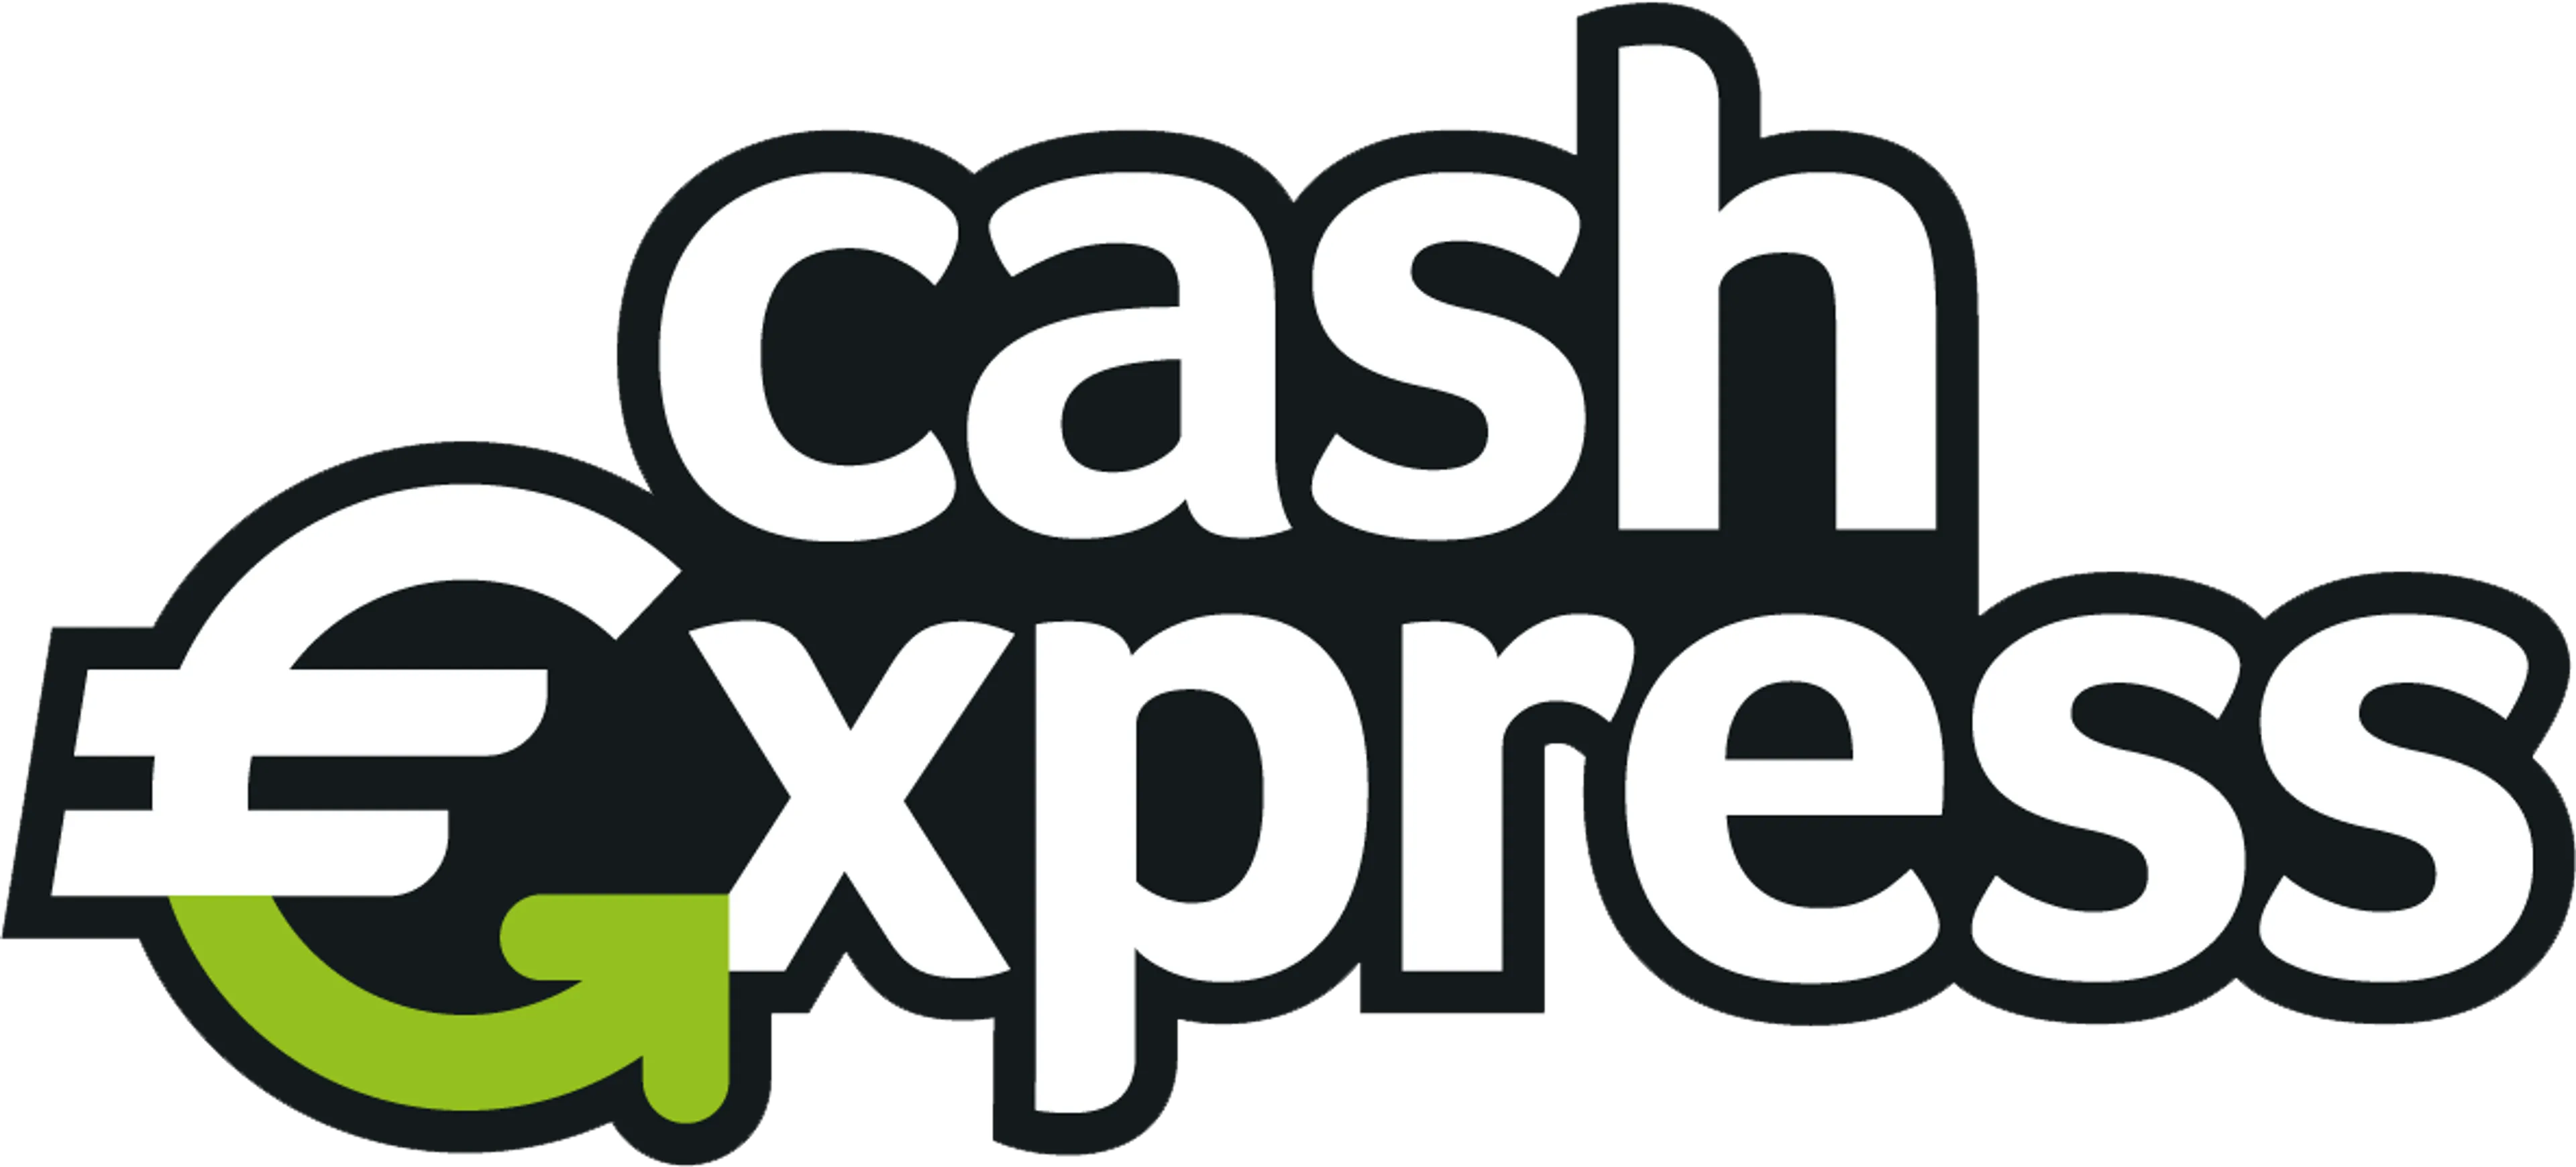 CASH EXPRESS logo